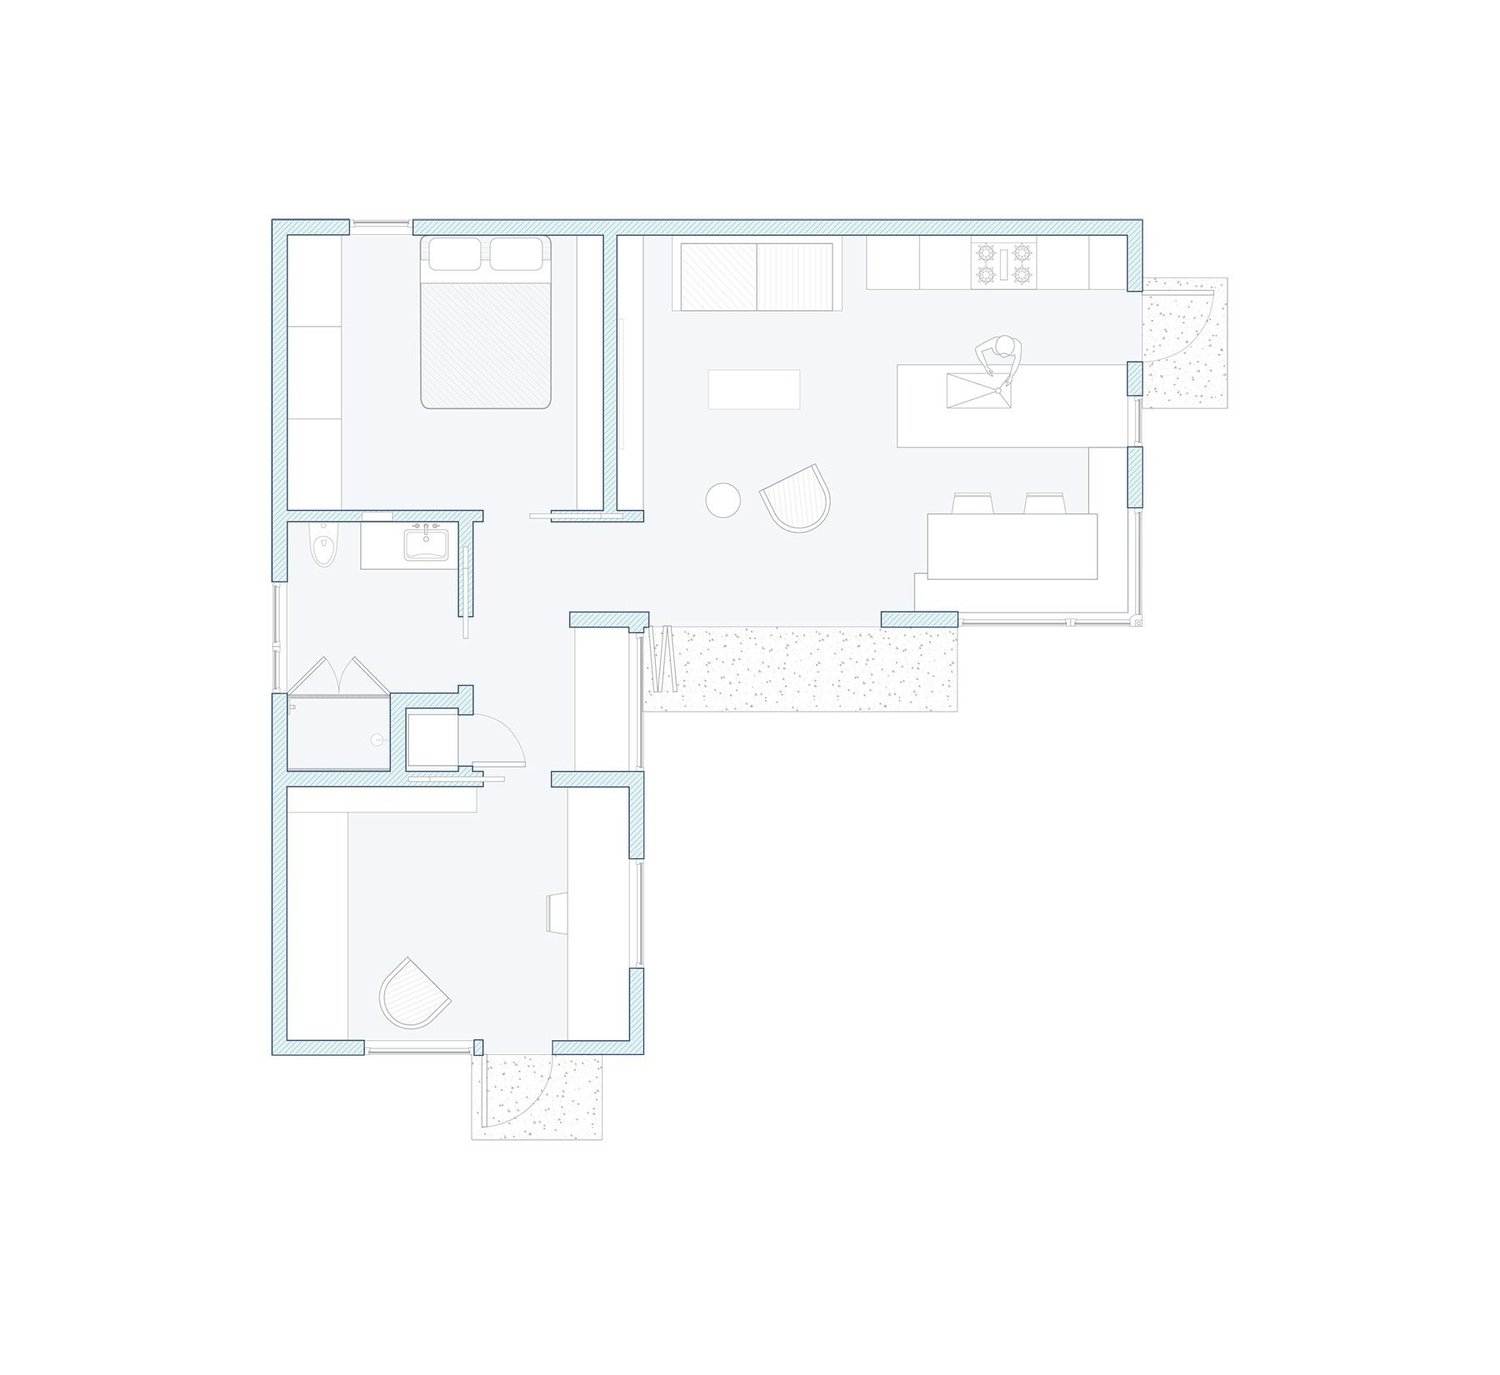 Over 700 Sq Ft — Backyard Living - Adu House Plans — Inspired Adus